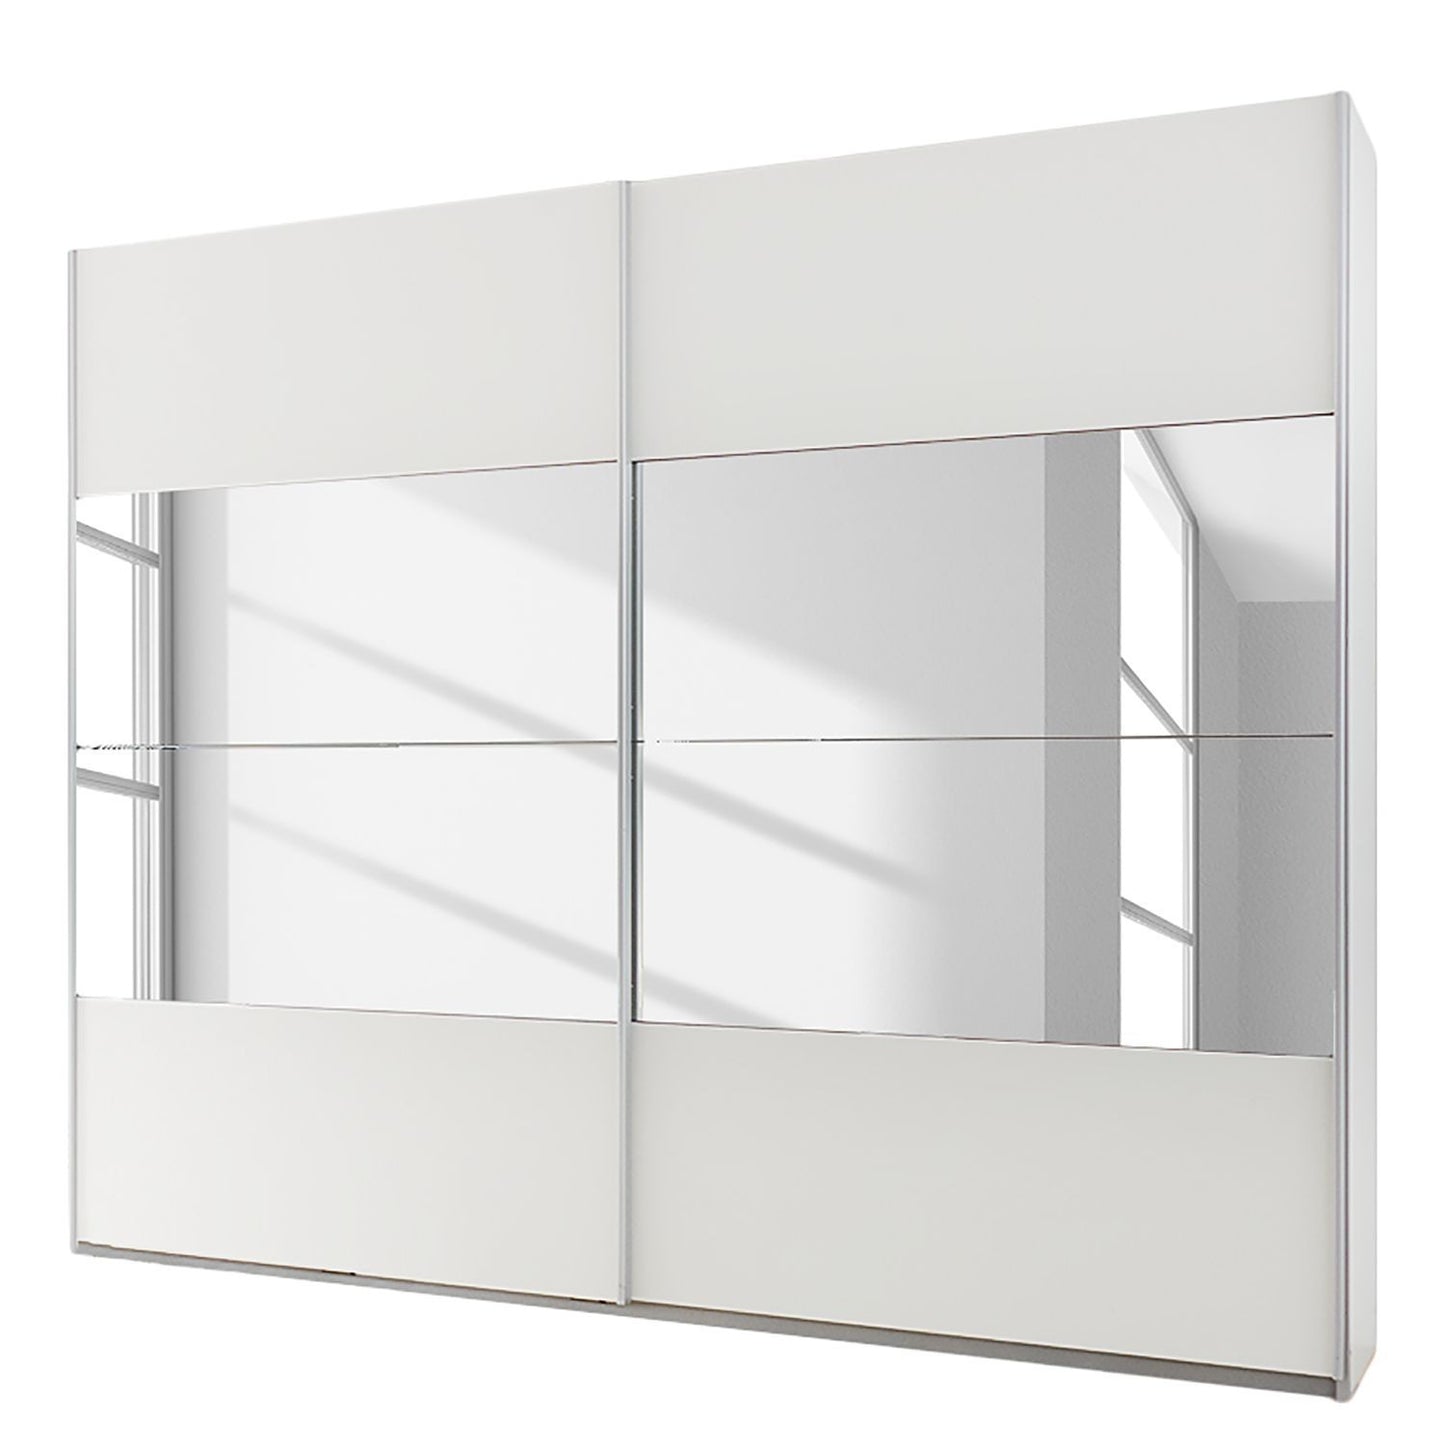 Rauch Quadra Sliding Door Wardrobe 181cm High Gloss White with Stripe Mirrors